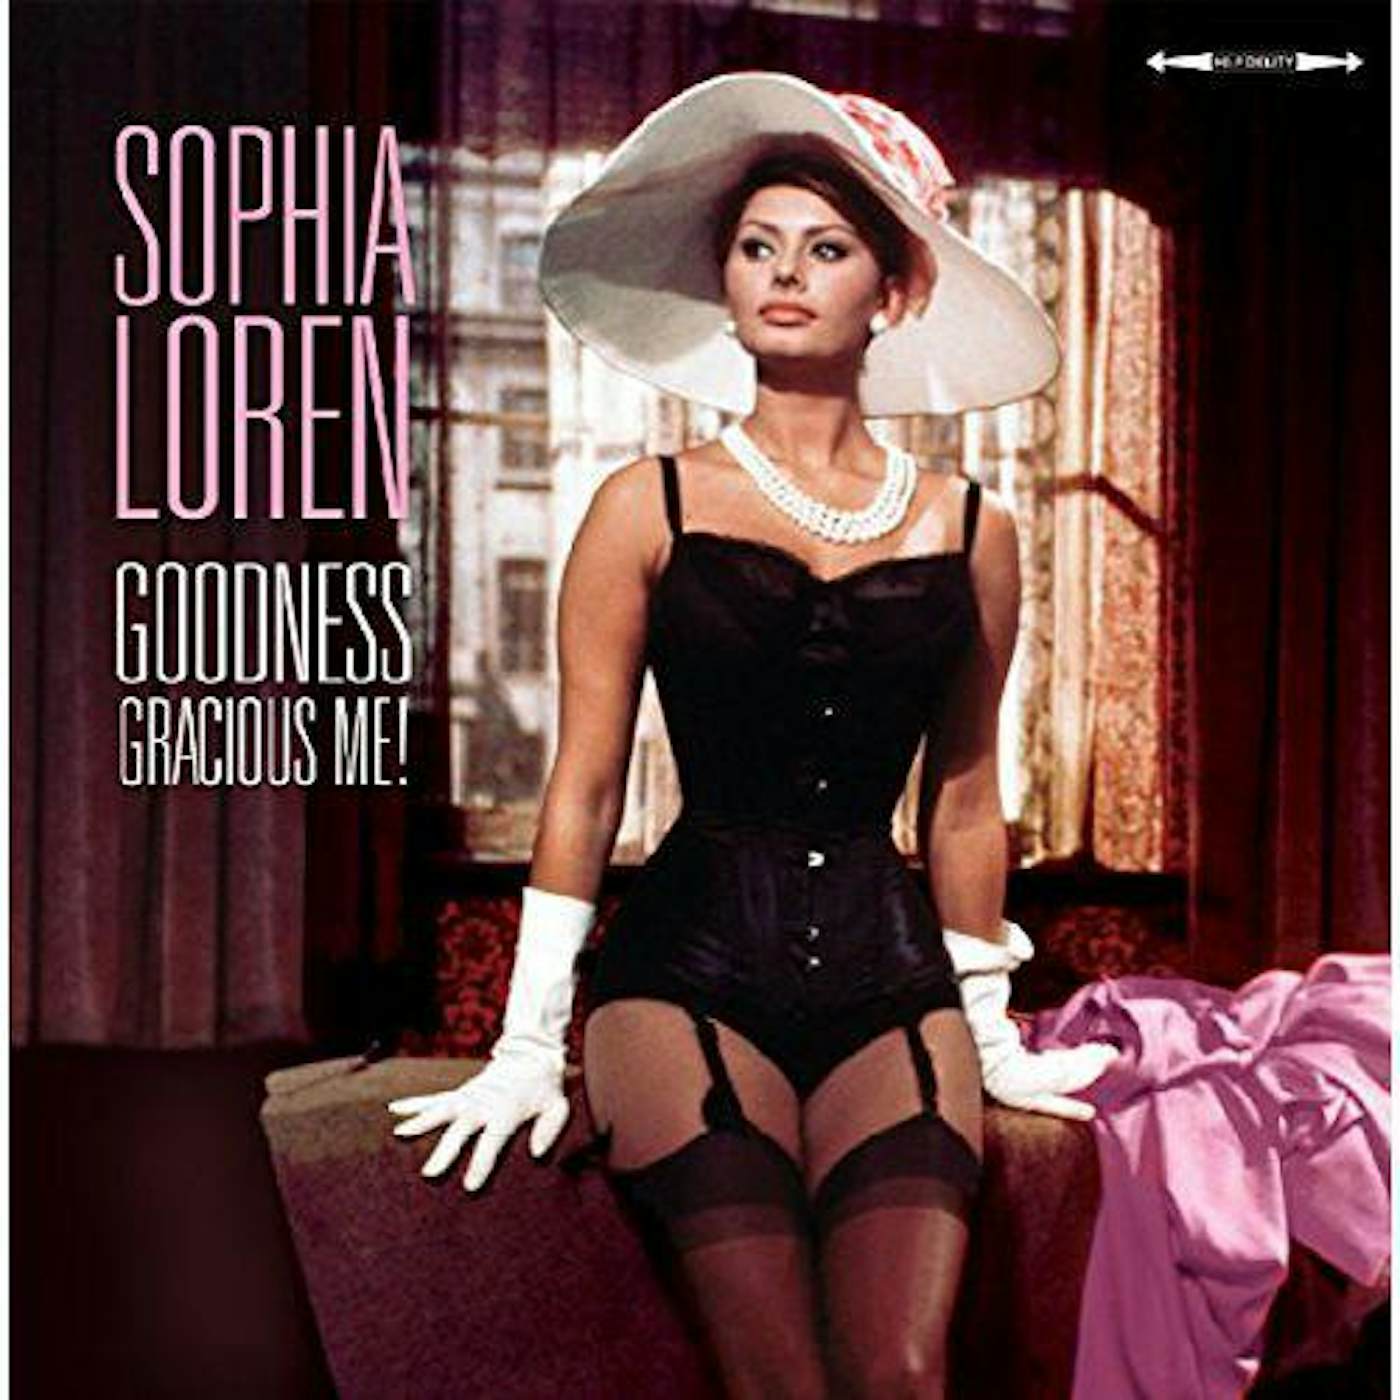 Sophia Loren GOODNESS GRACIOUS ME (RED VINYL) Vinyl Record